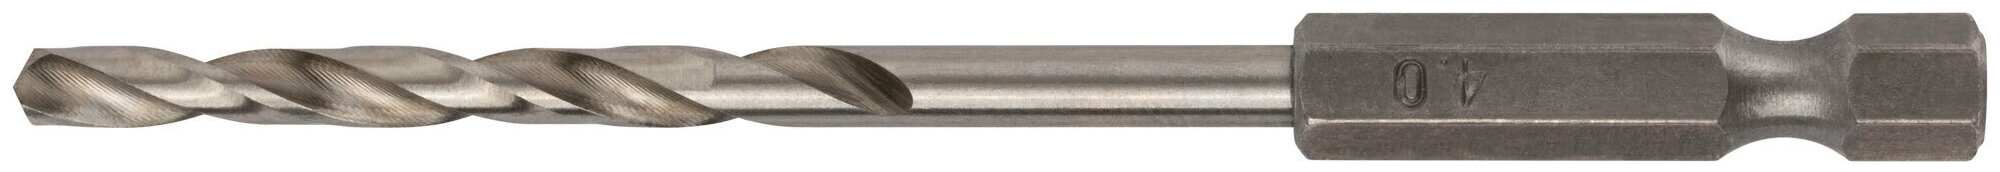 Сверло HSS по металлу, полированное, U-хвостовик под биту, инд. упаковка 4,0 мм 34040